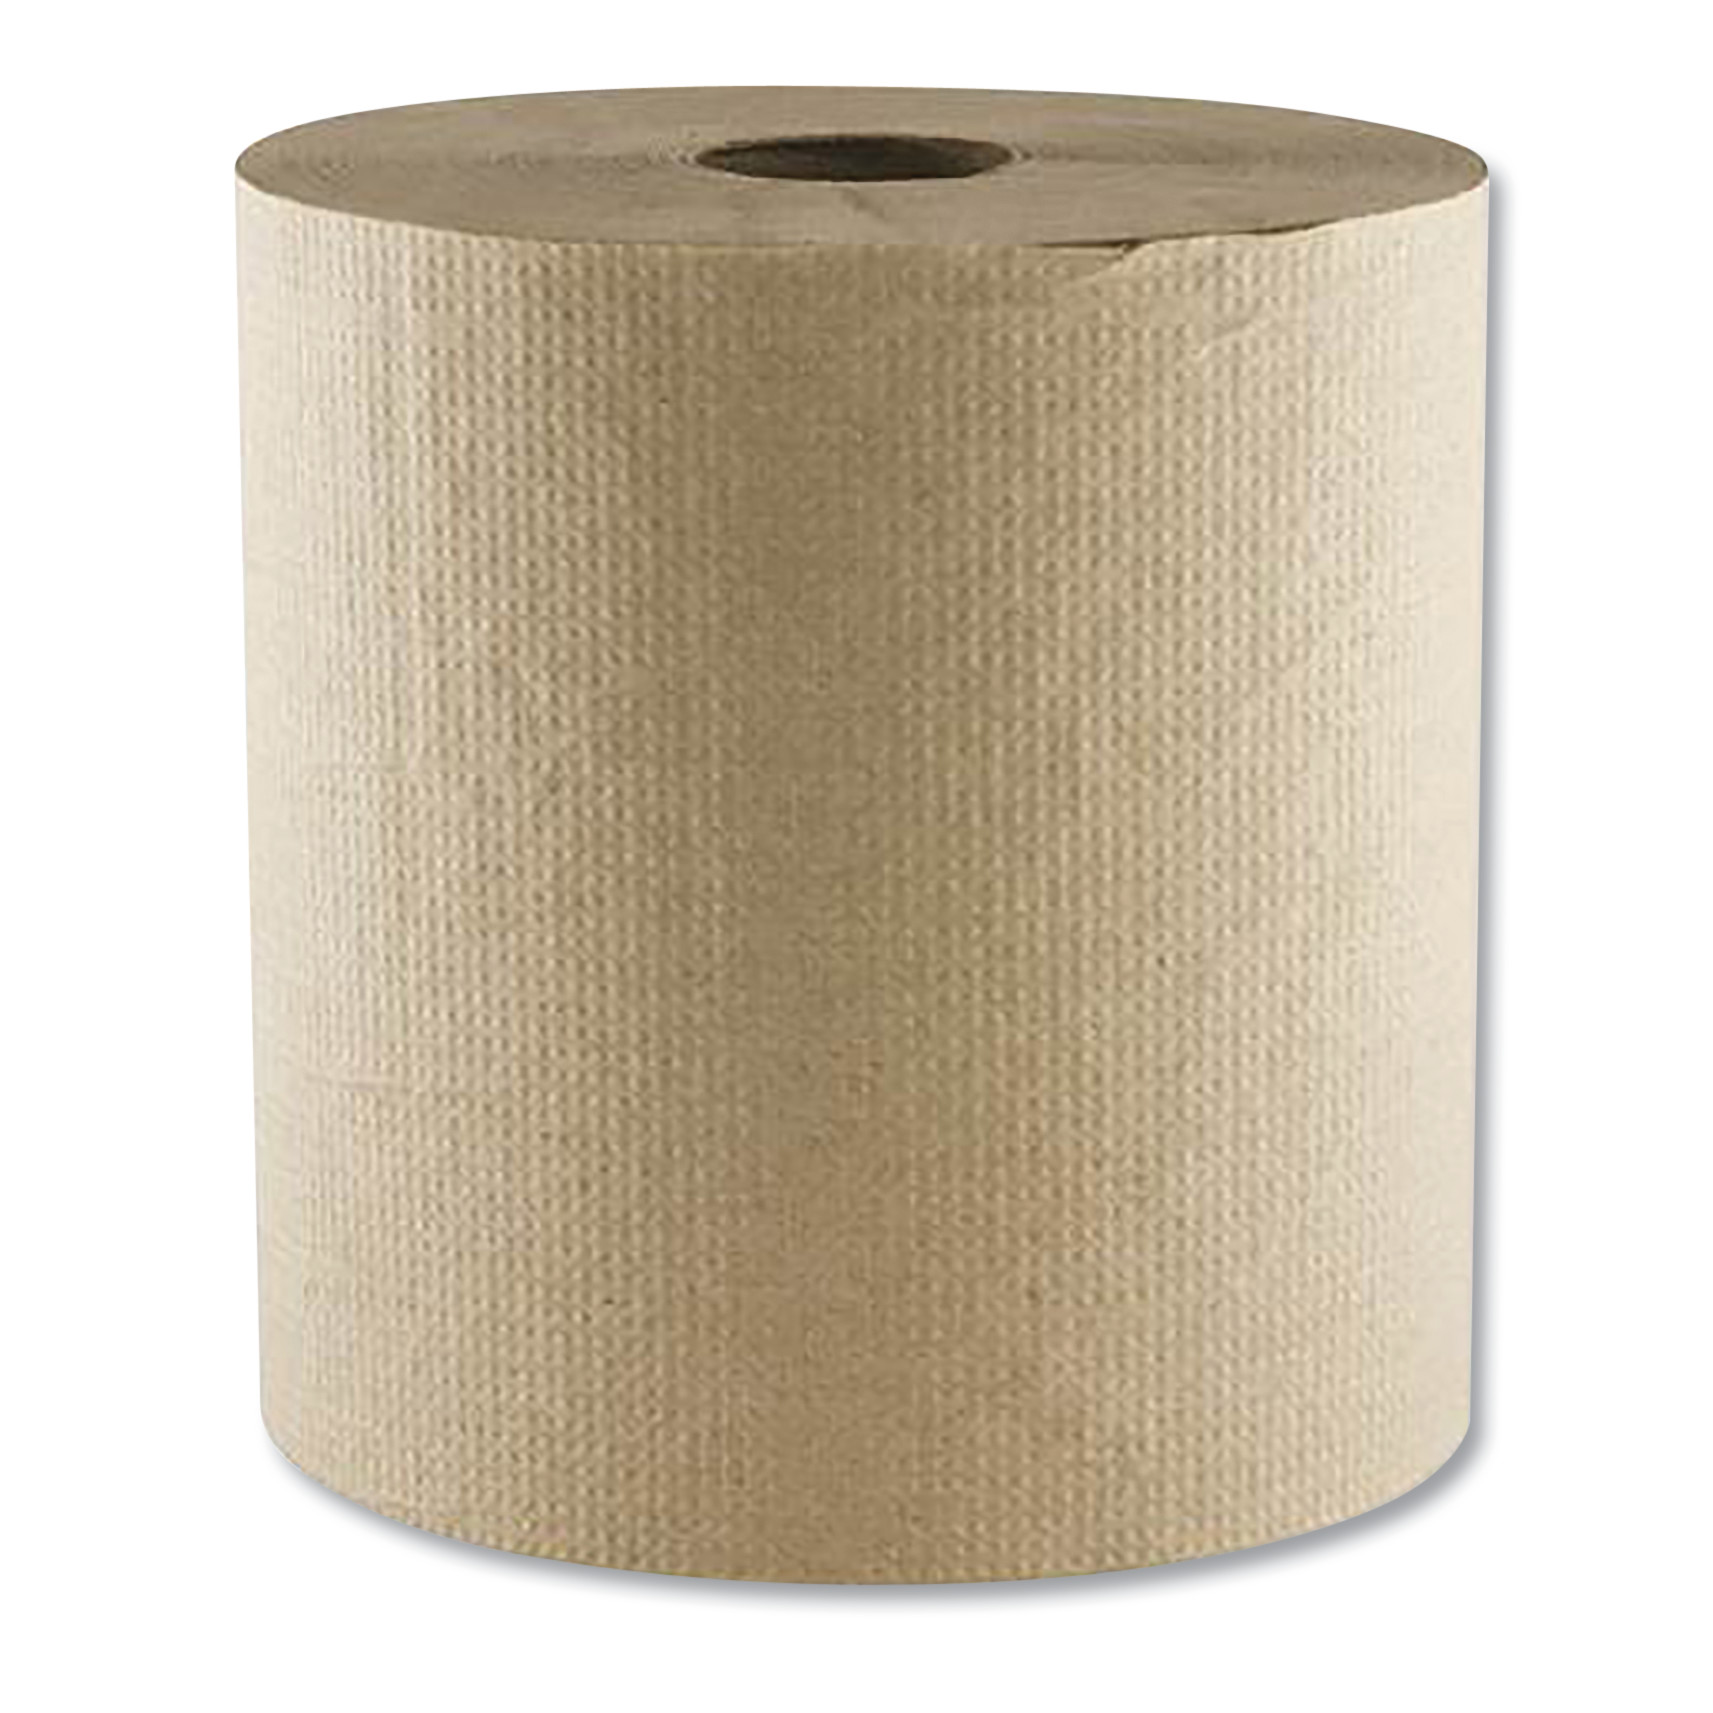  Morcon Tissue MOR 6700R Morsoft Universal Roll Towels, 1-Ply, 8 x 700 ft, Kraft, 6 Rolls/Carton (MOR6700R) 